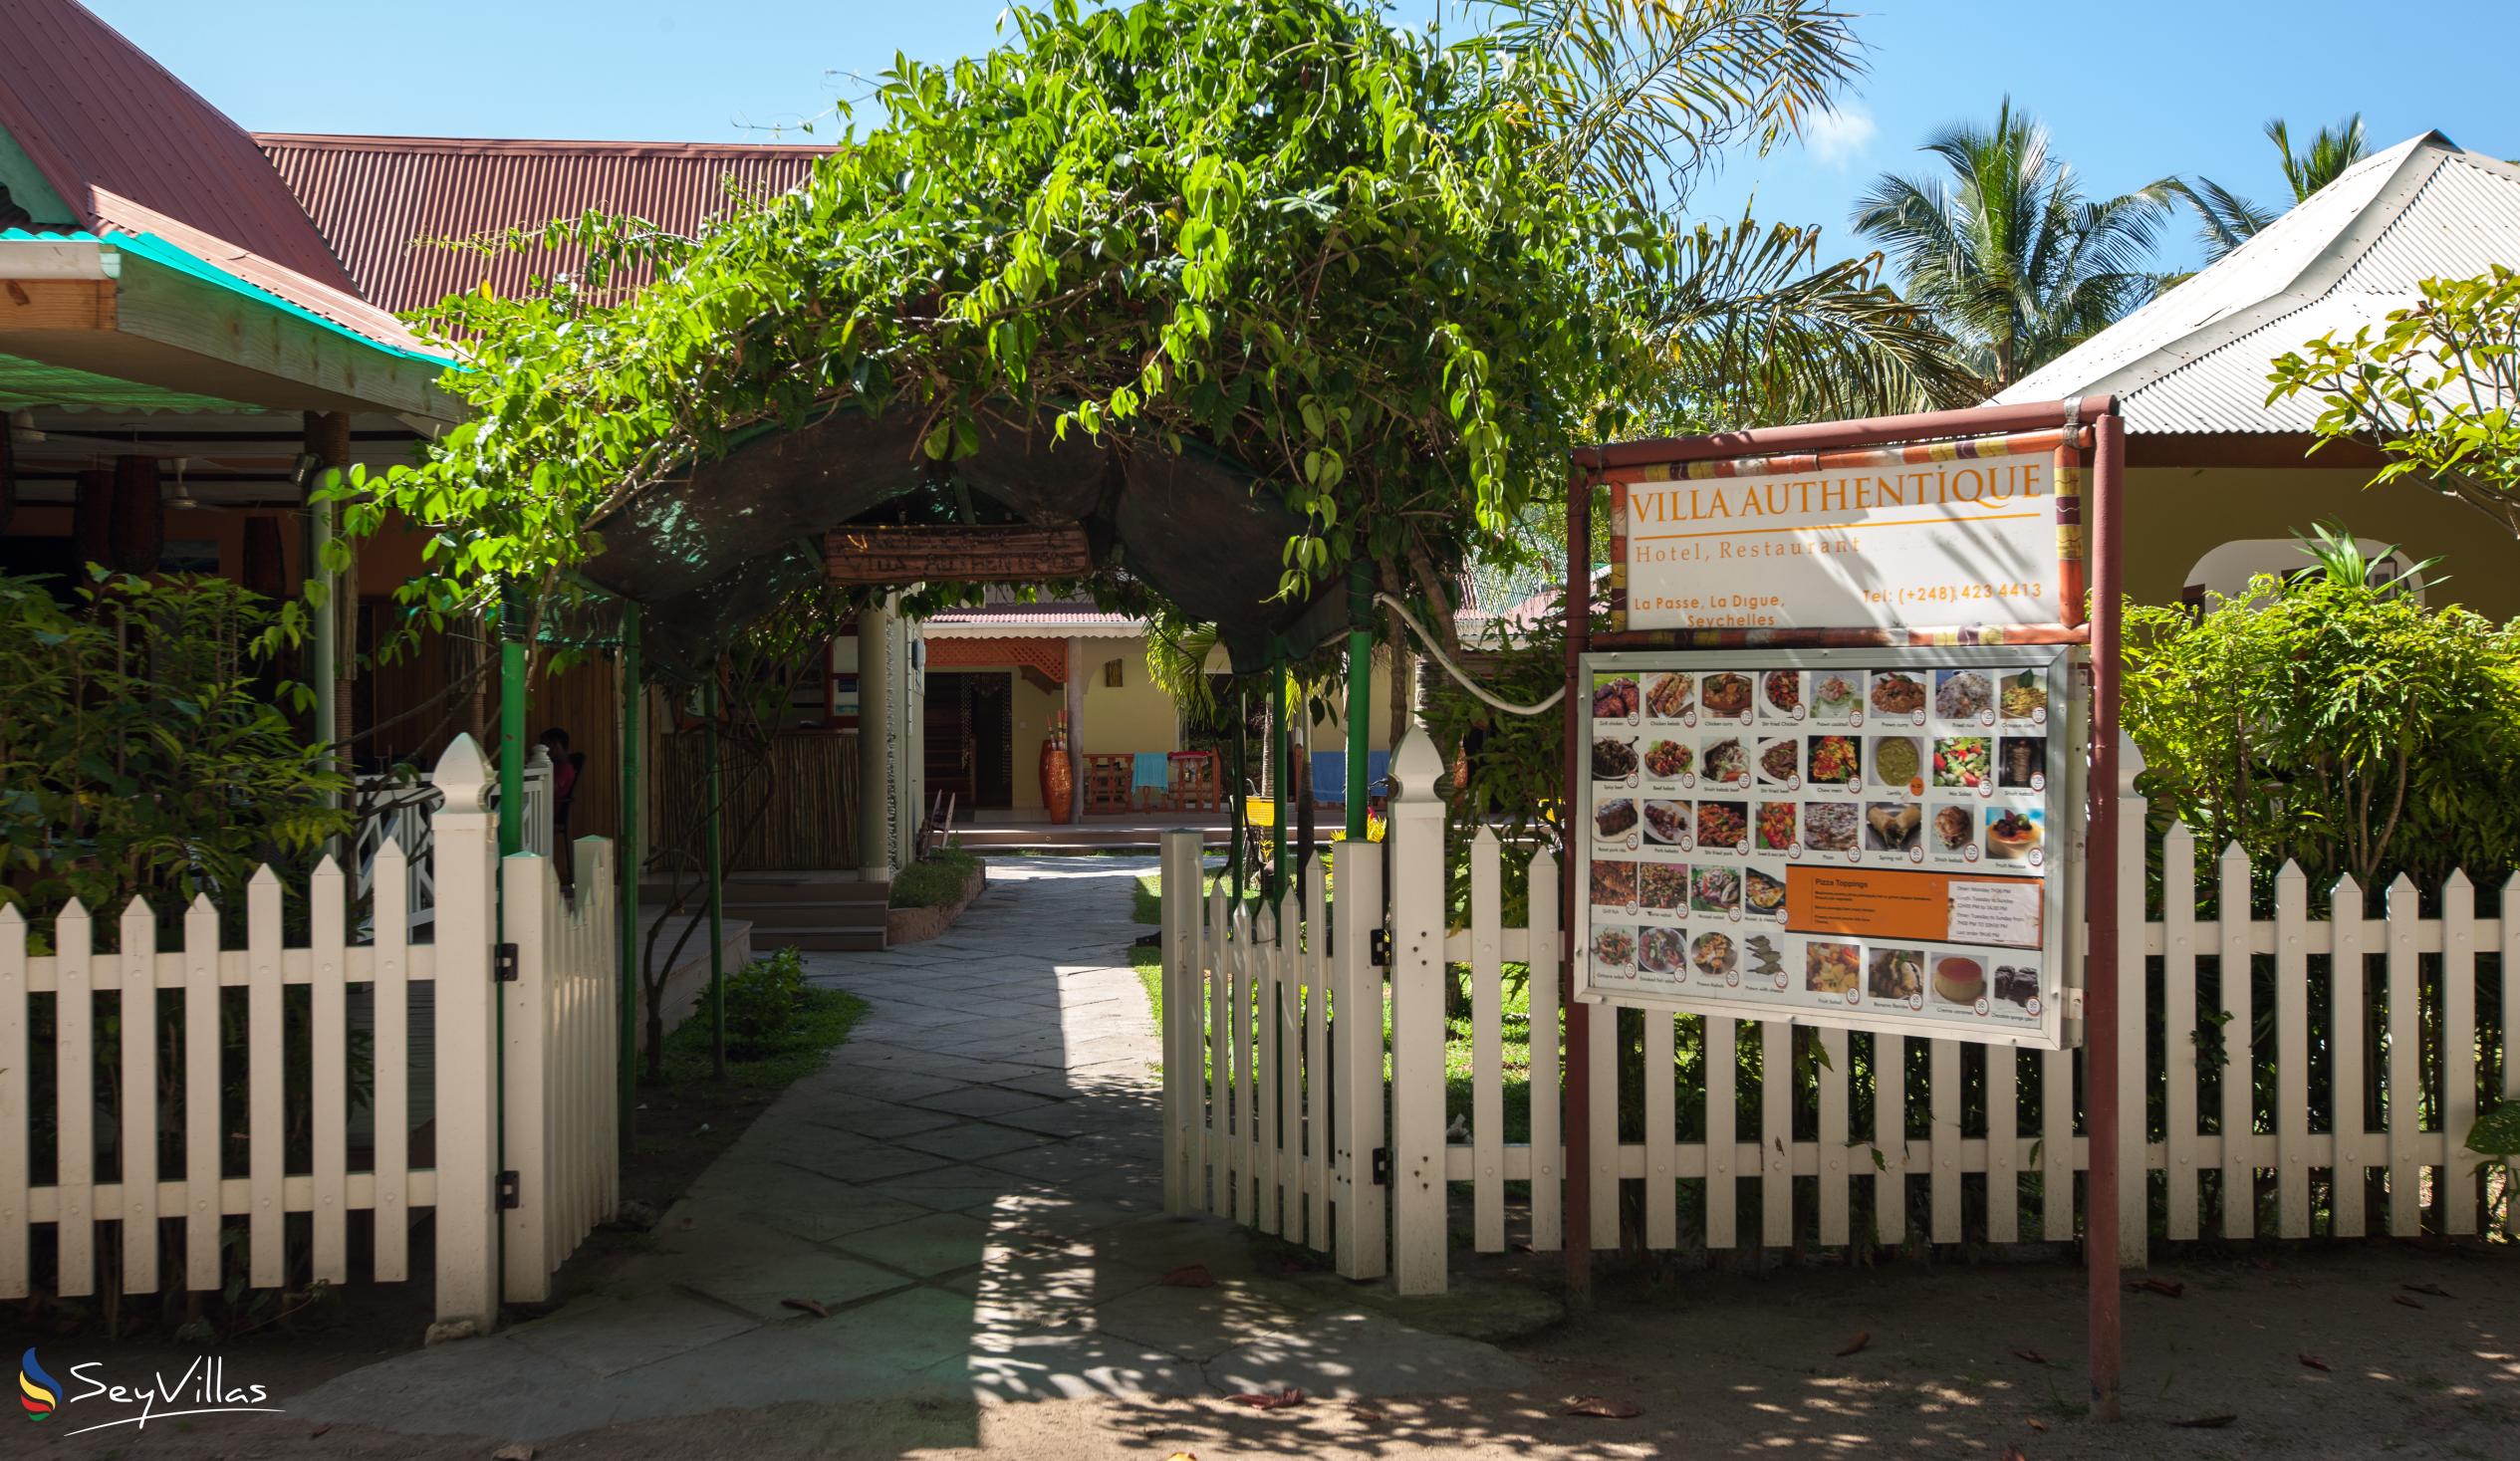 Photo 4: Villa Authentique - Outdoor area - La Digue (Seychelles)